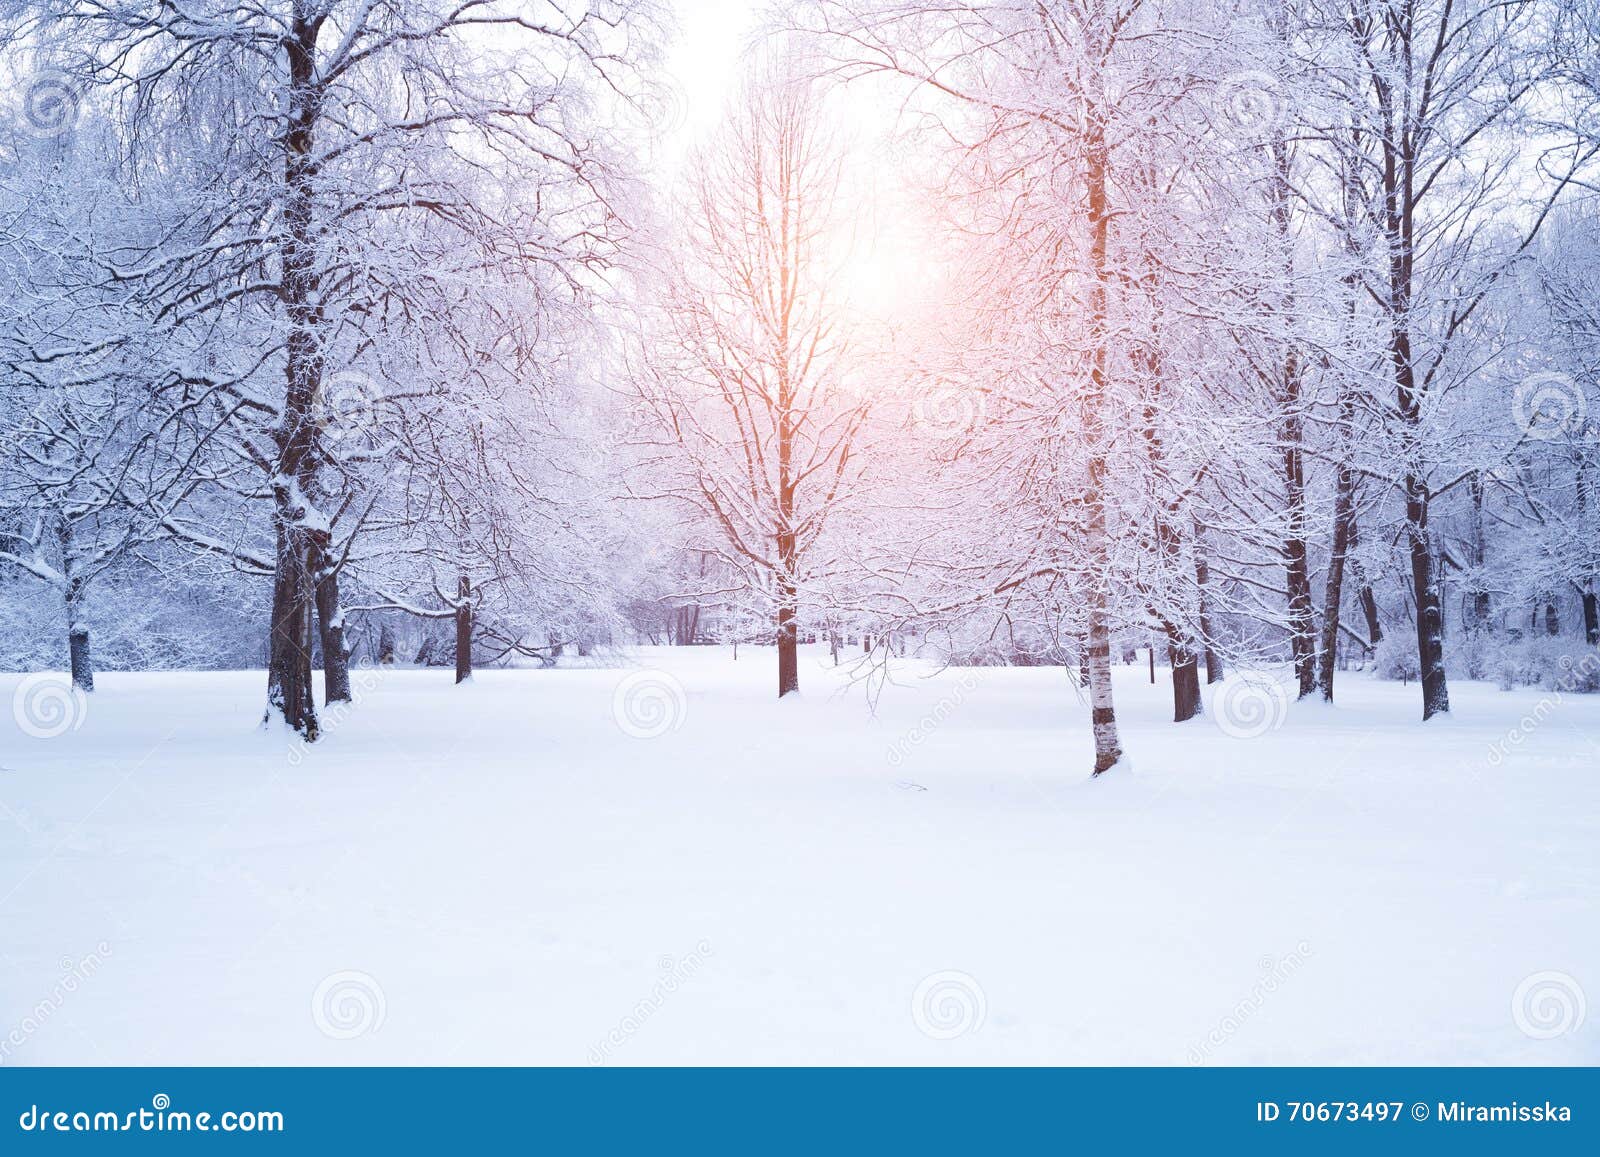 winter background, landscape. winter trees in wonderland. winter